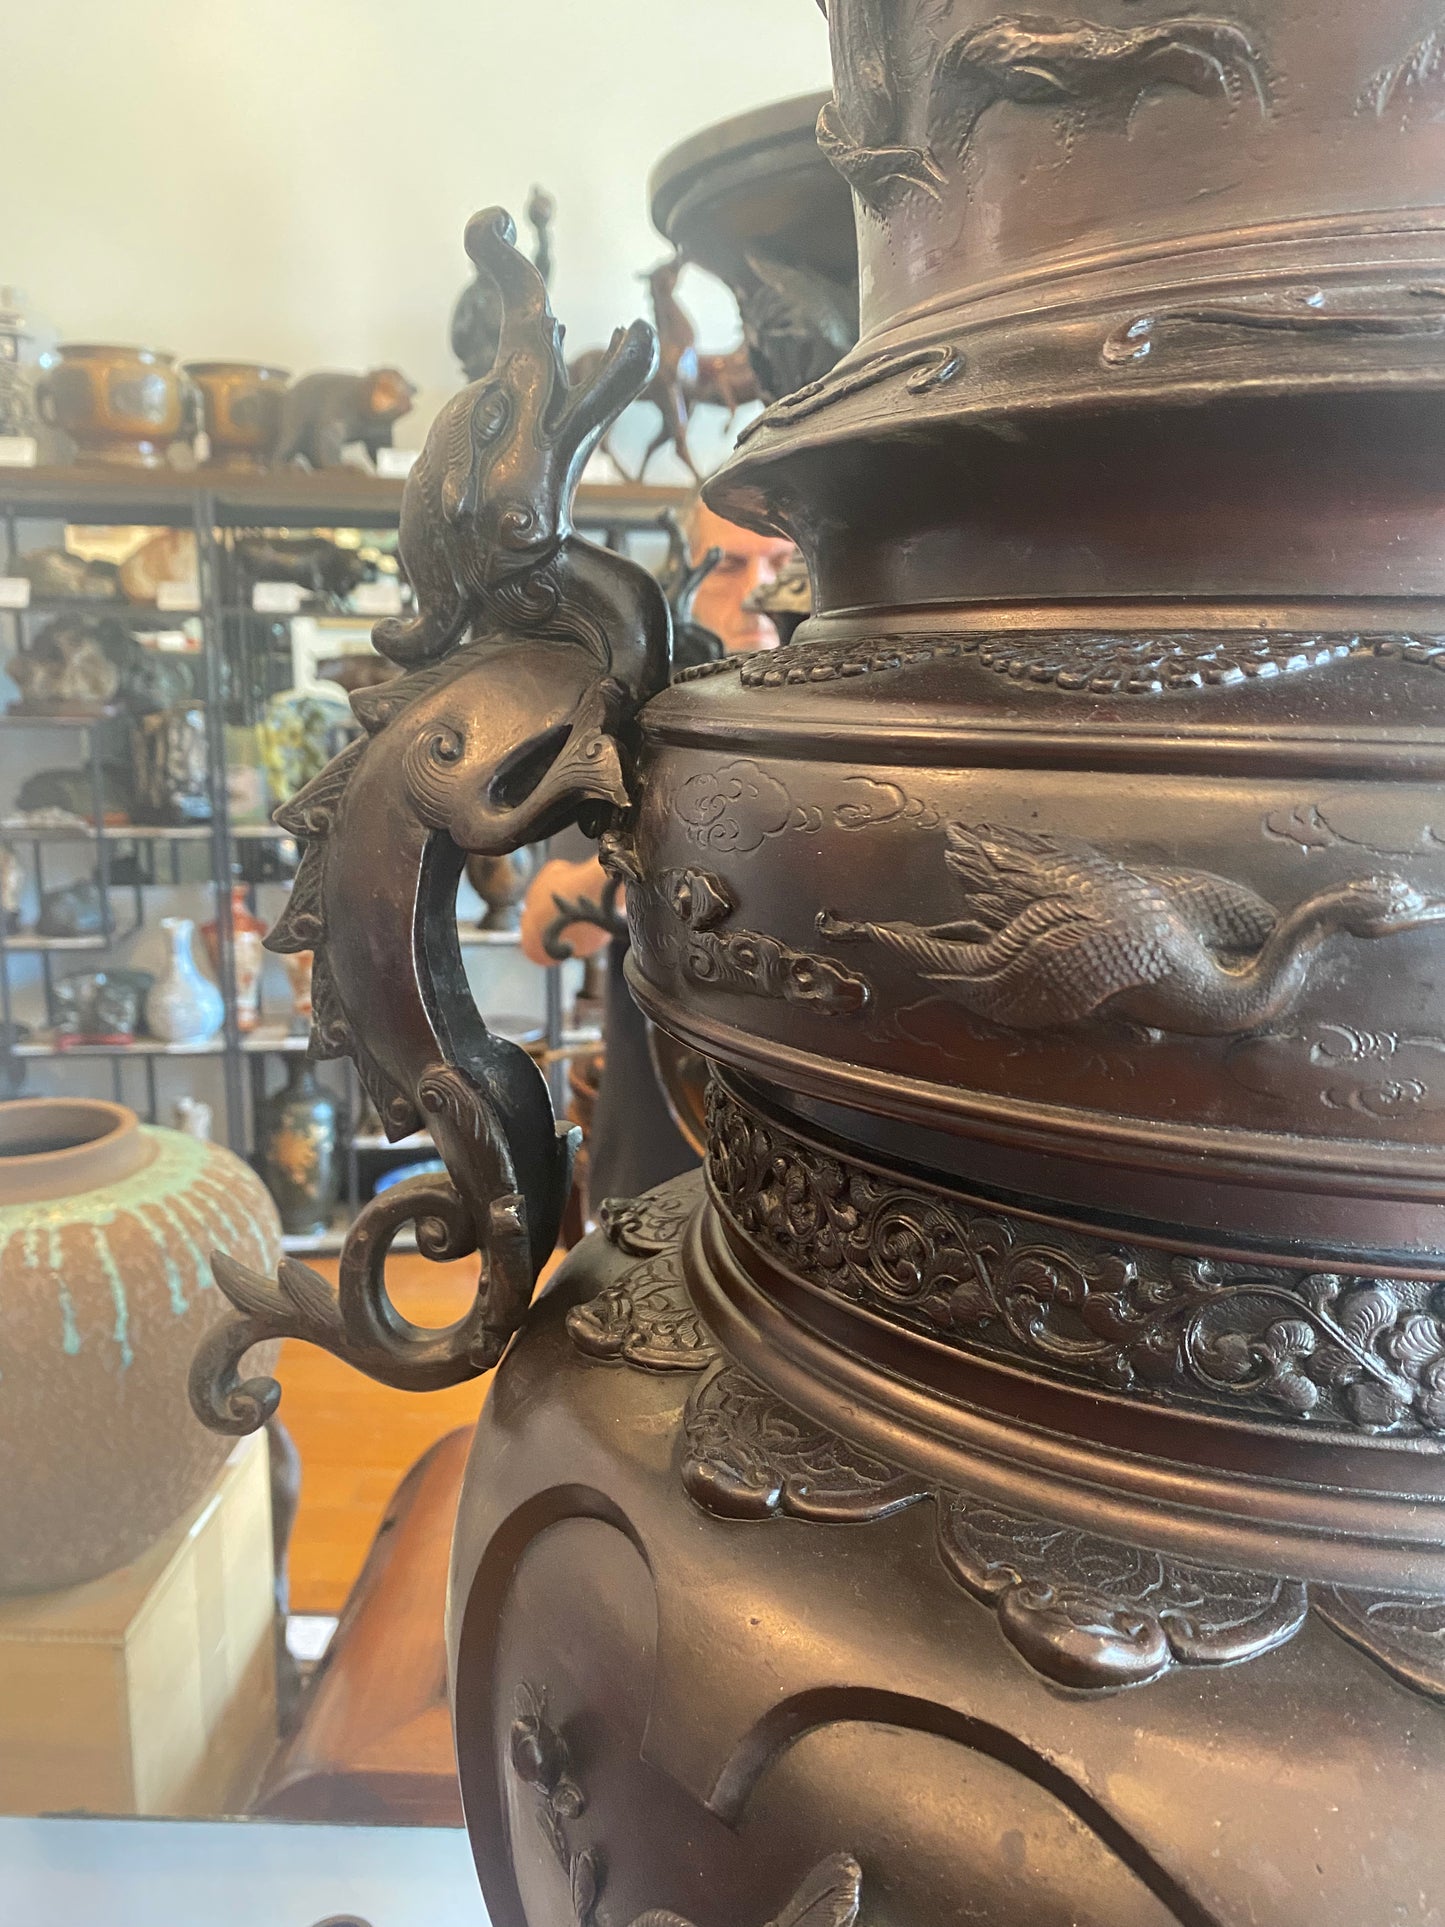 Japanese Bronze Urn